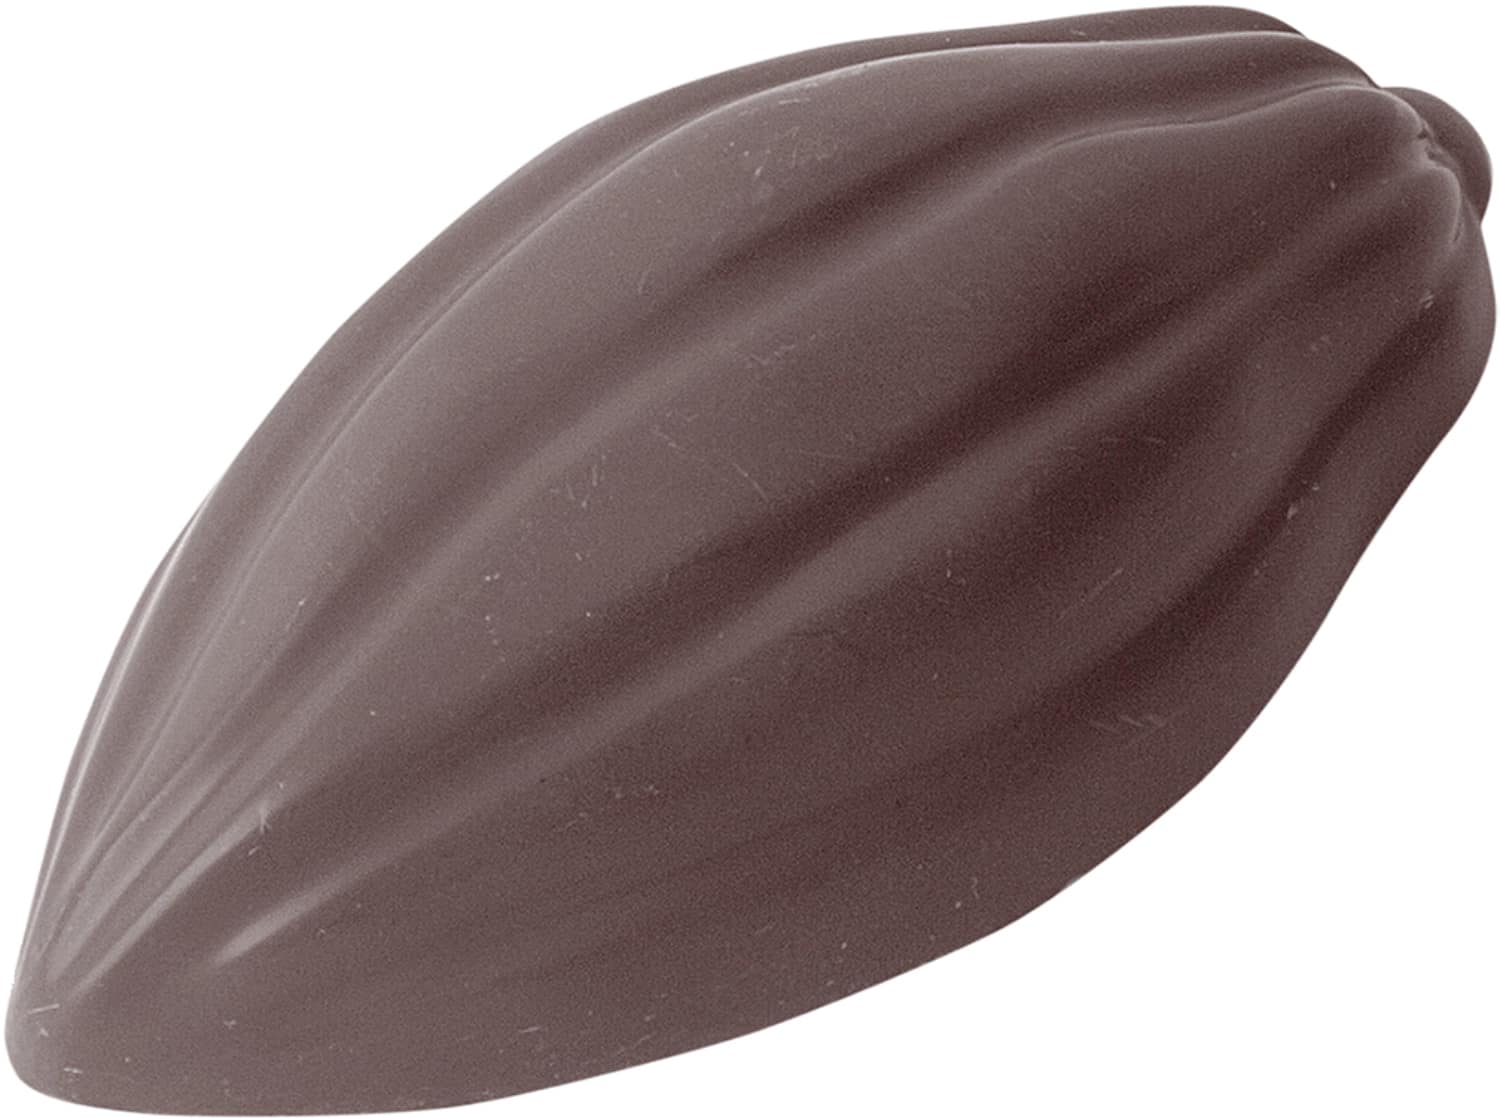 Chocolate mould "Cocoa bean" 422370